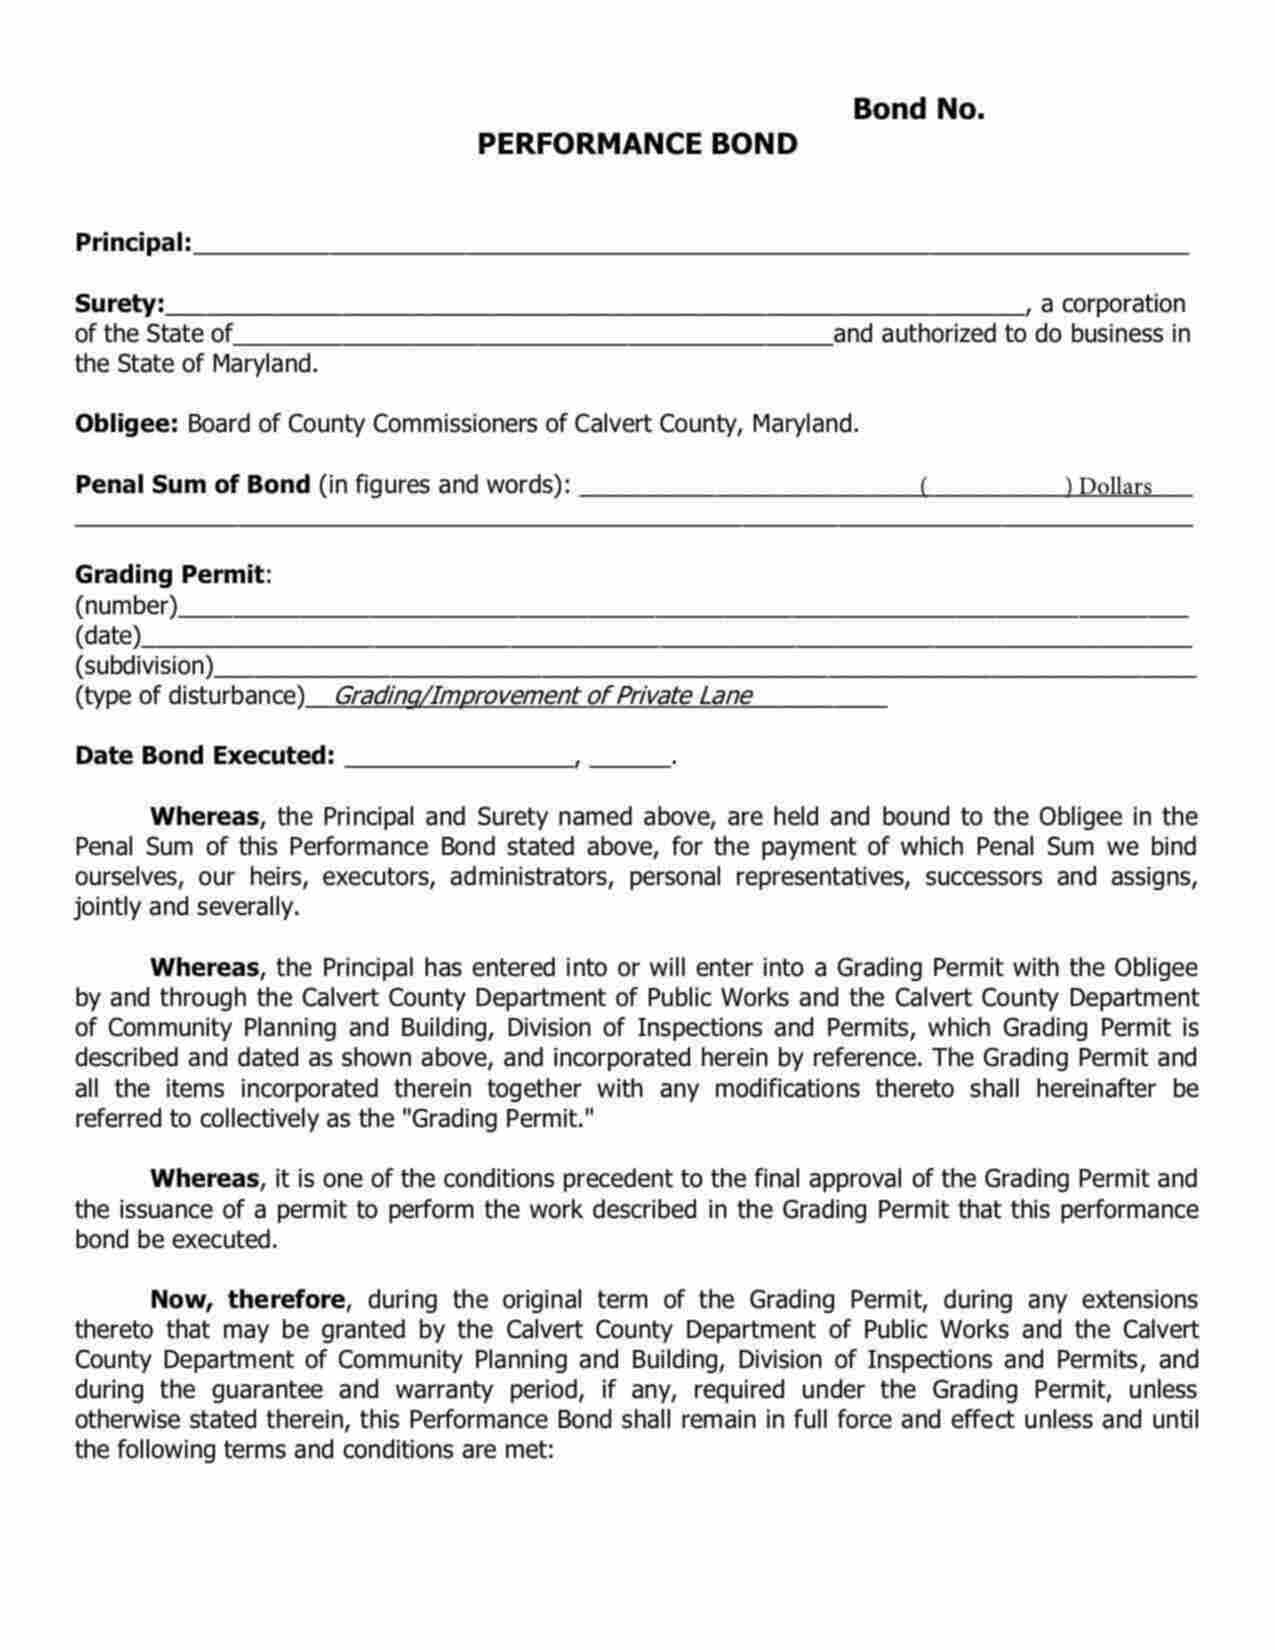 Maryland Grading Permit Bond Form